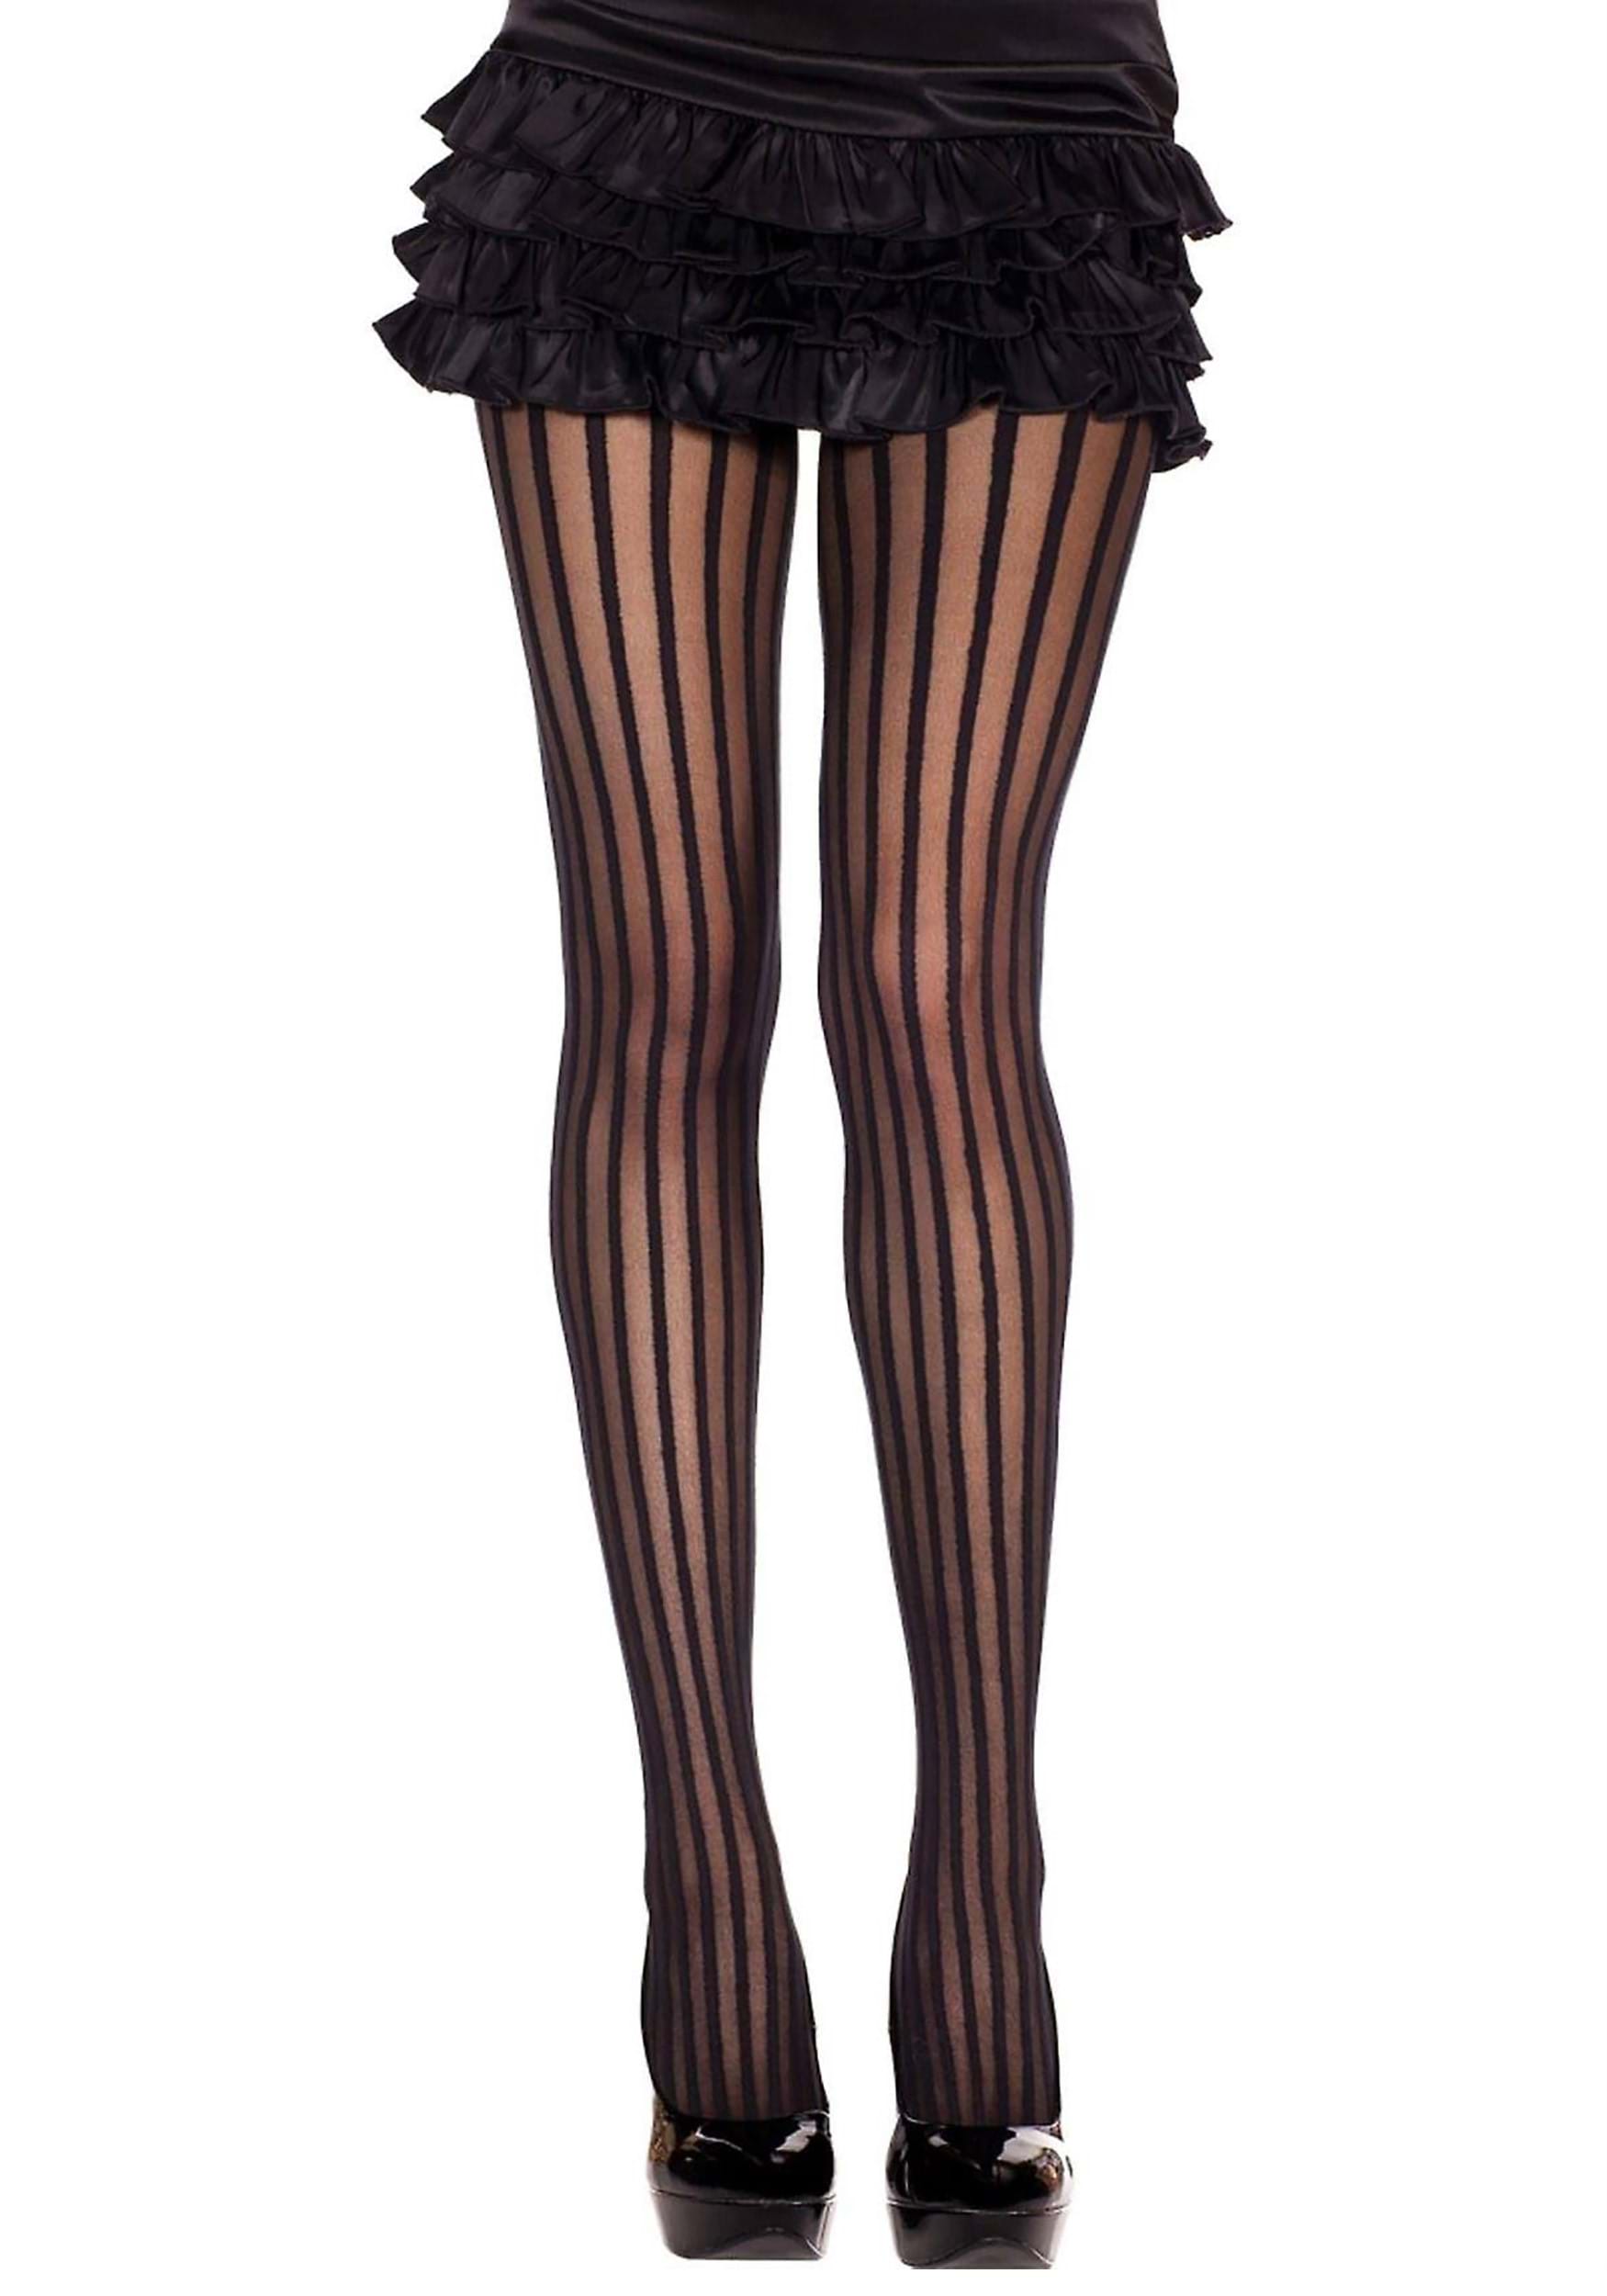 Women's Vertical Black Stripe Stockings , Fancy Dress Costume Tights